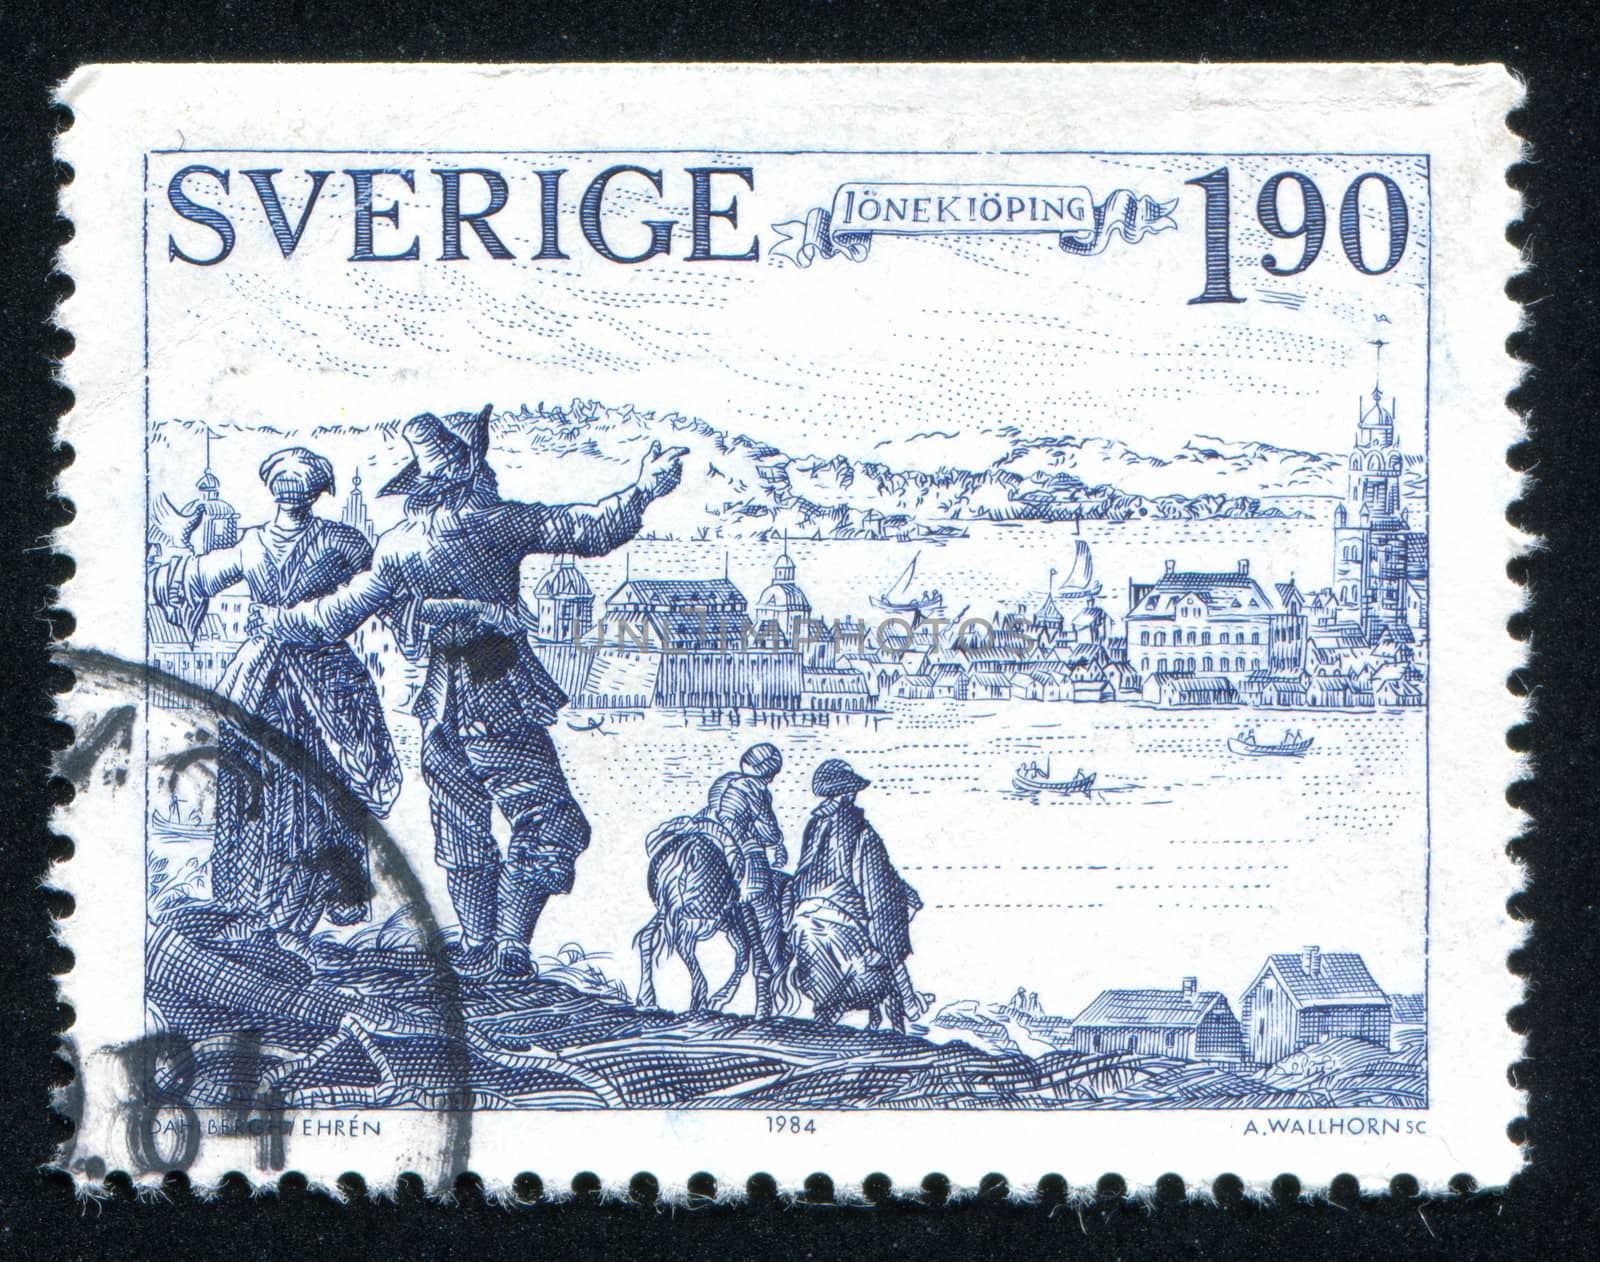 SWEDEN - CIRCA 1984: stamp printed by Sweden, shows Jonkoping, circa 1984